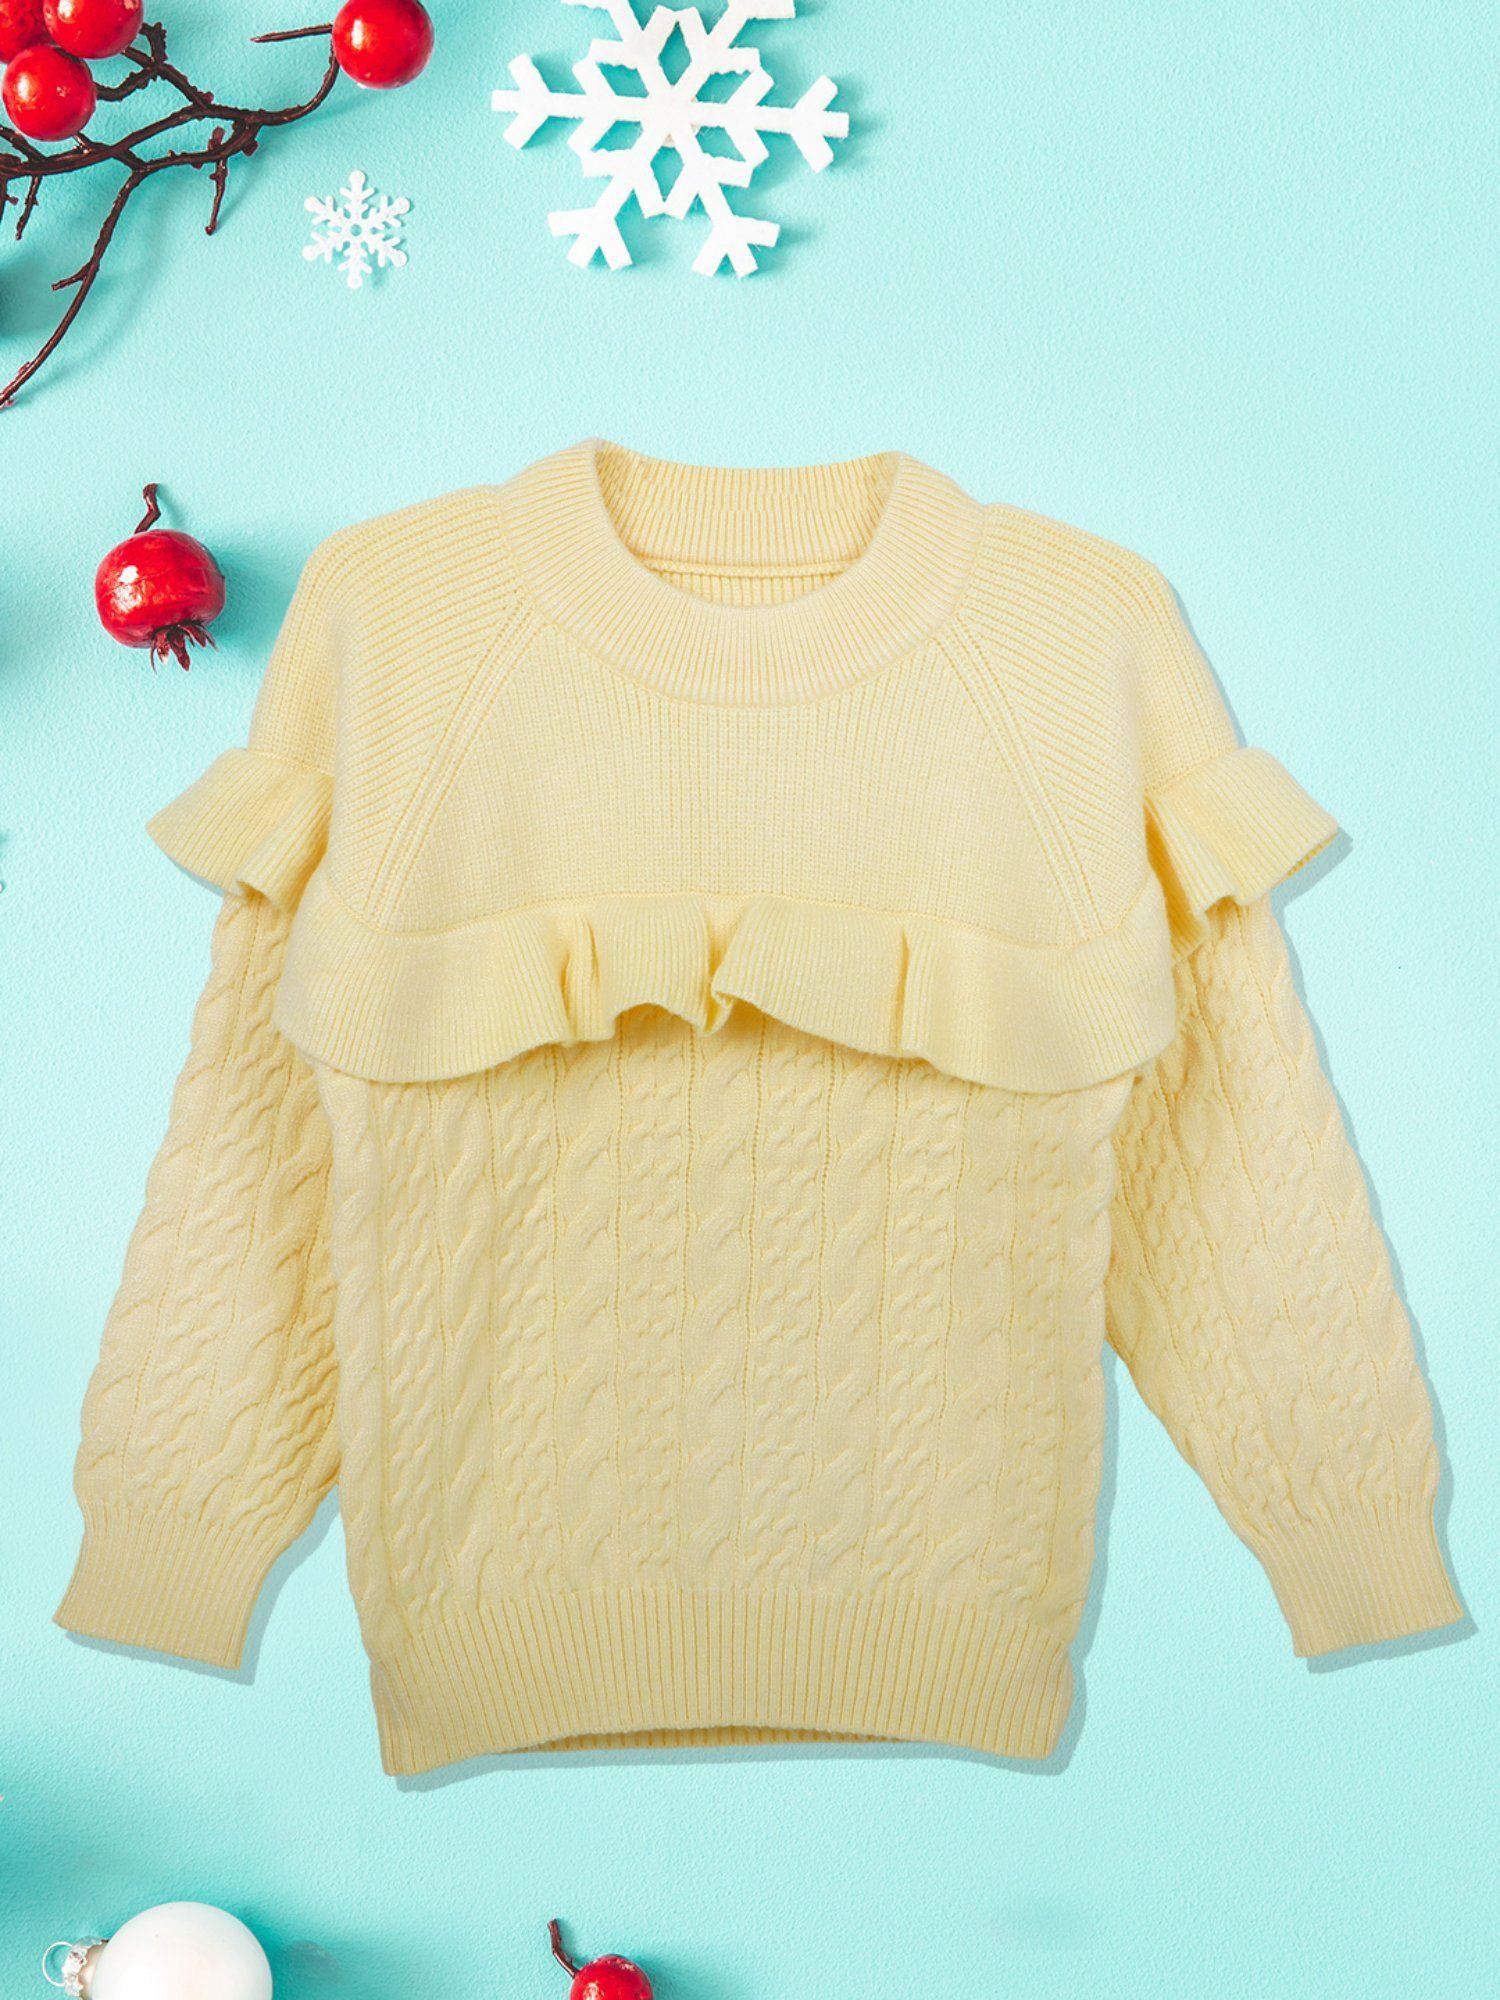 ruffled jumper premium full sleeves braided knit sweater yellow